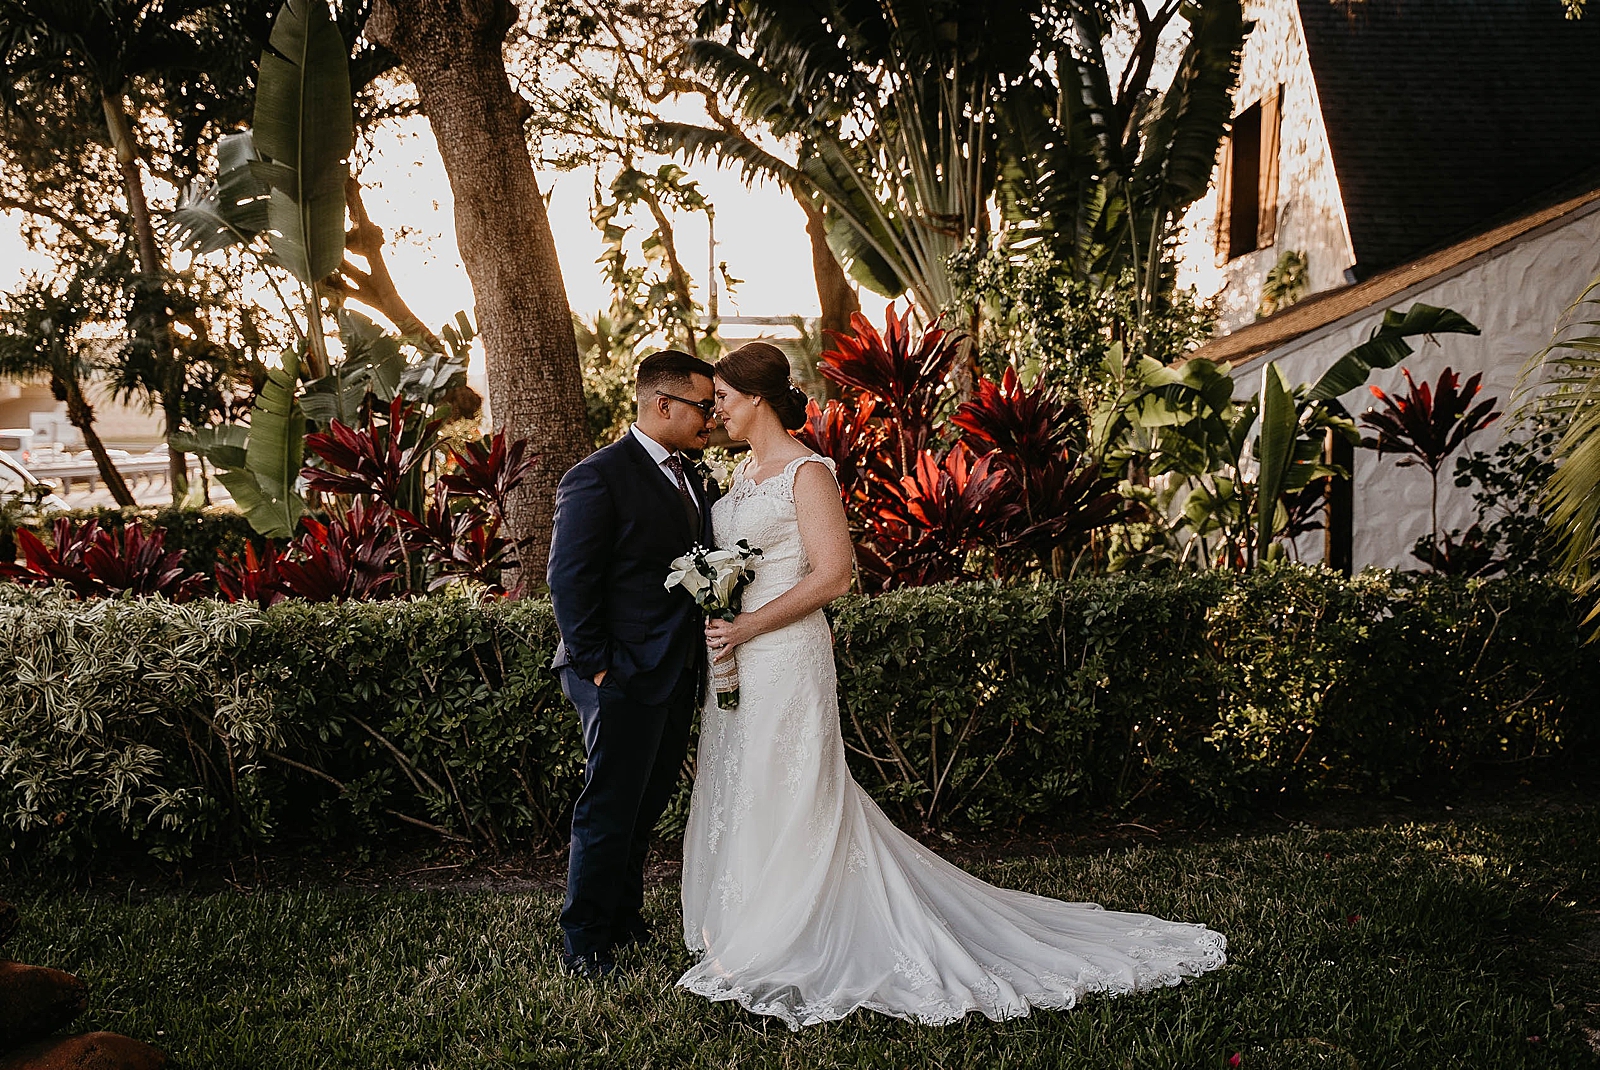 94th aerosquadron miami wedding photos by Krystal Capone Photography